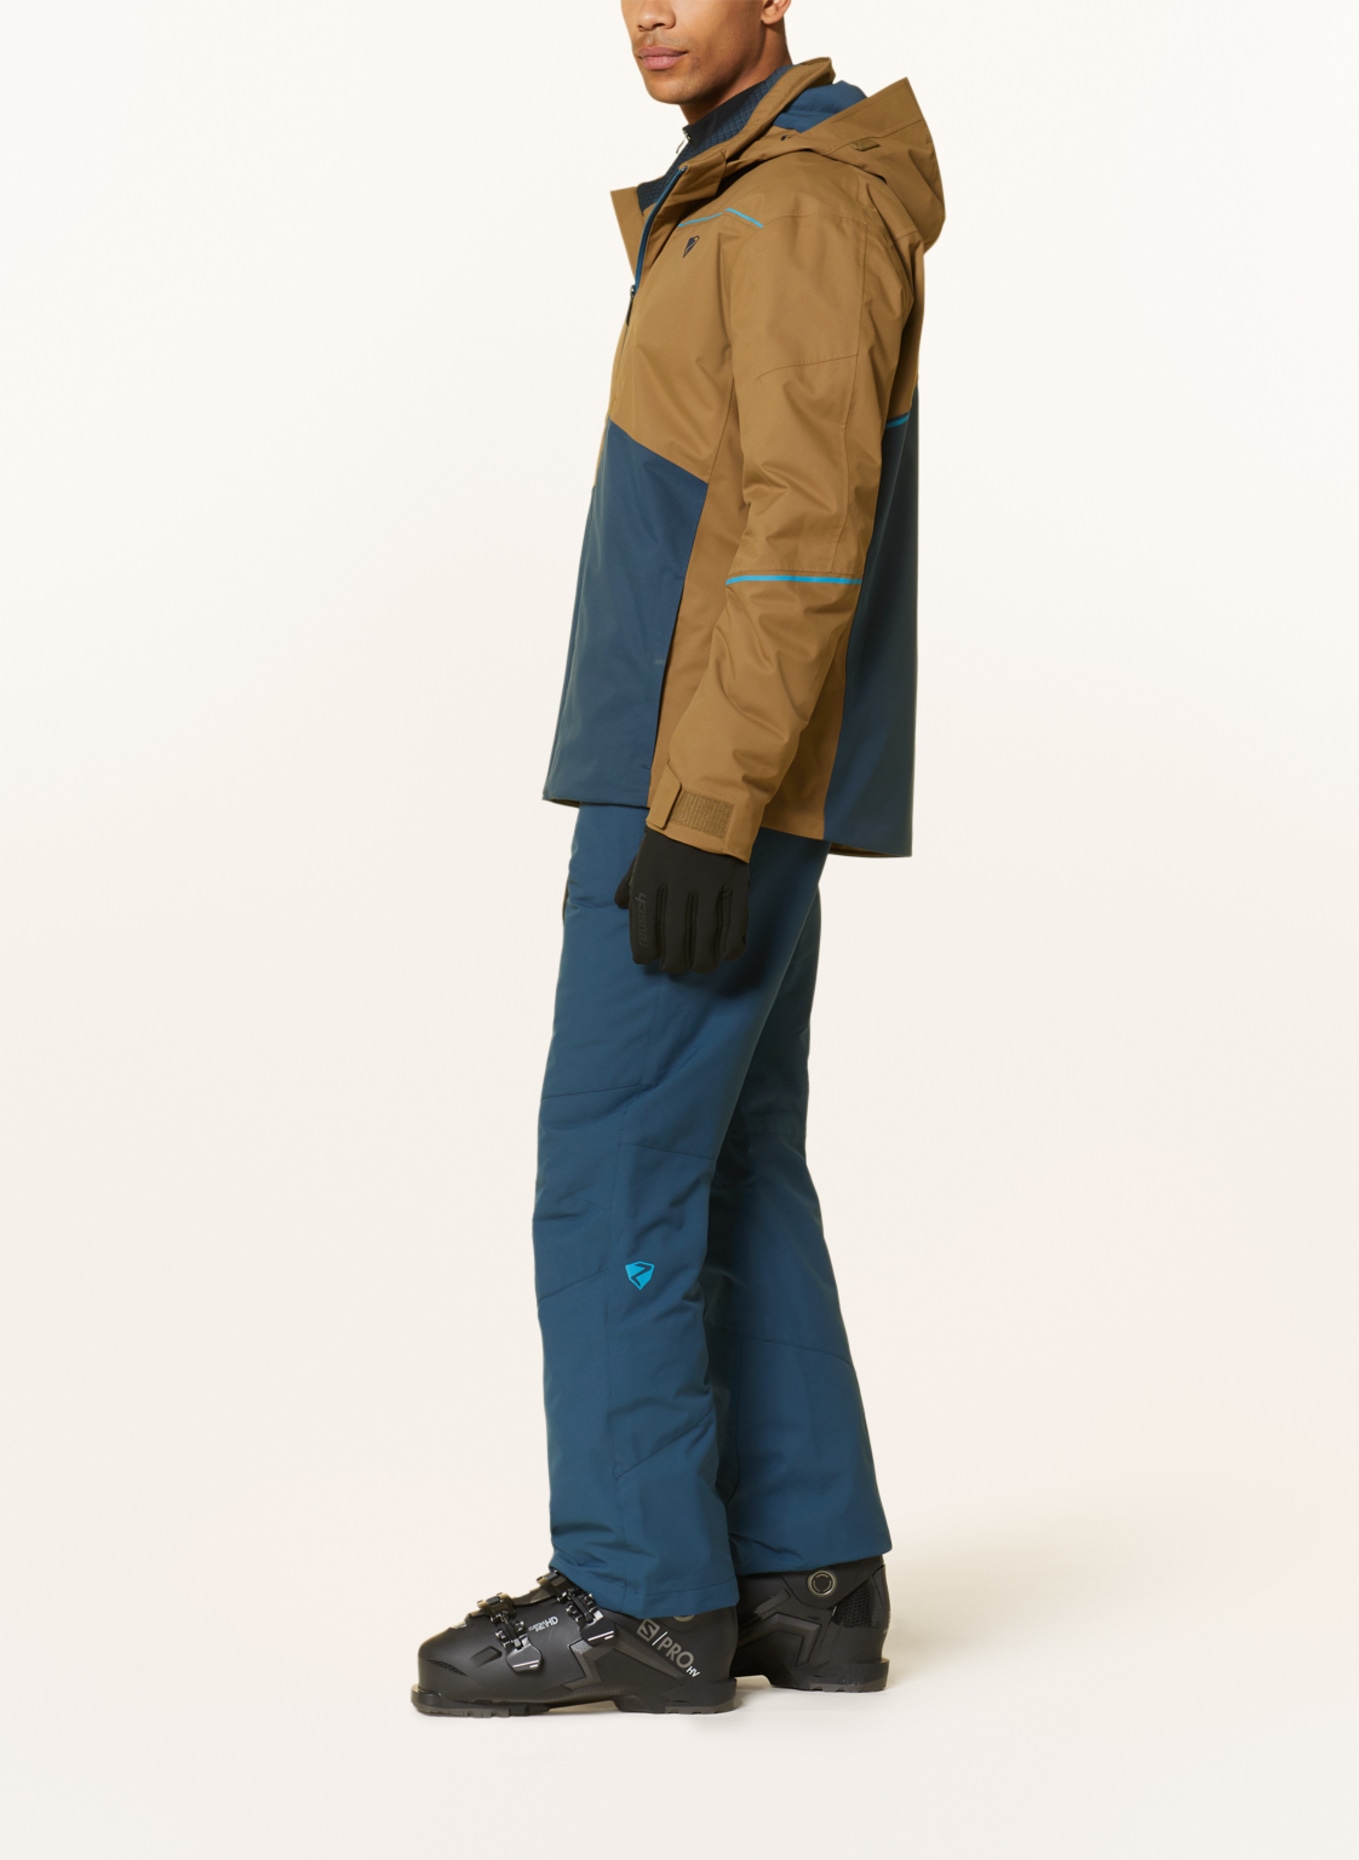 ziener Ski jacket TOACA in brown/ dark blue | Sportjacken